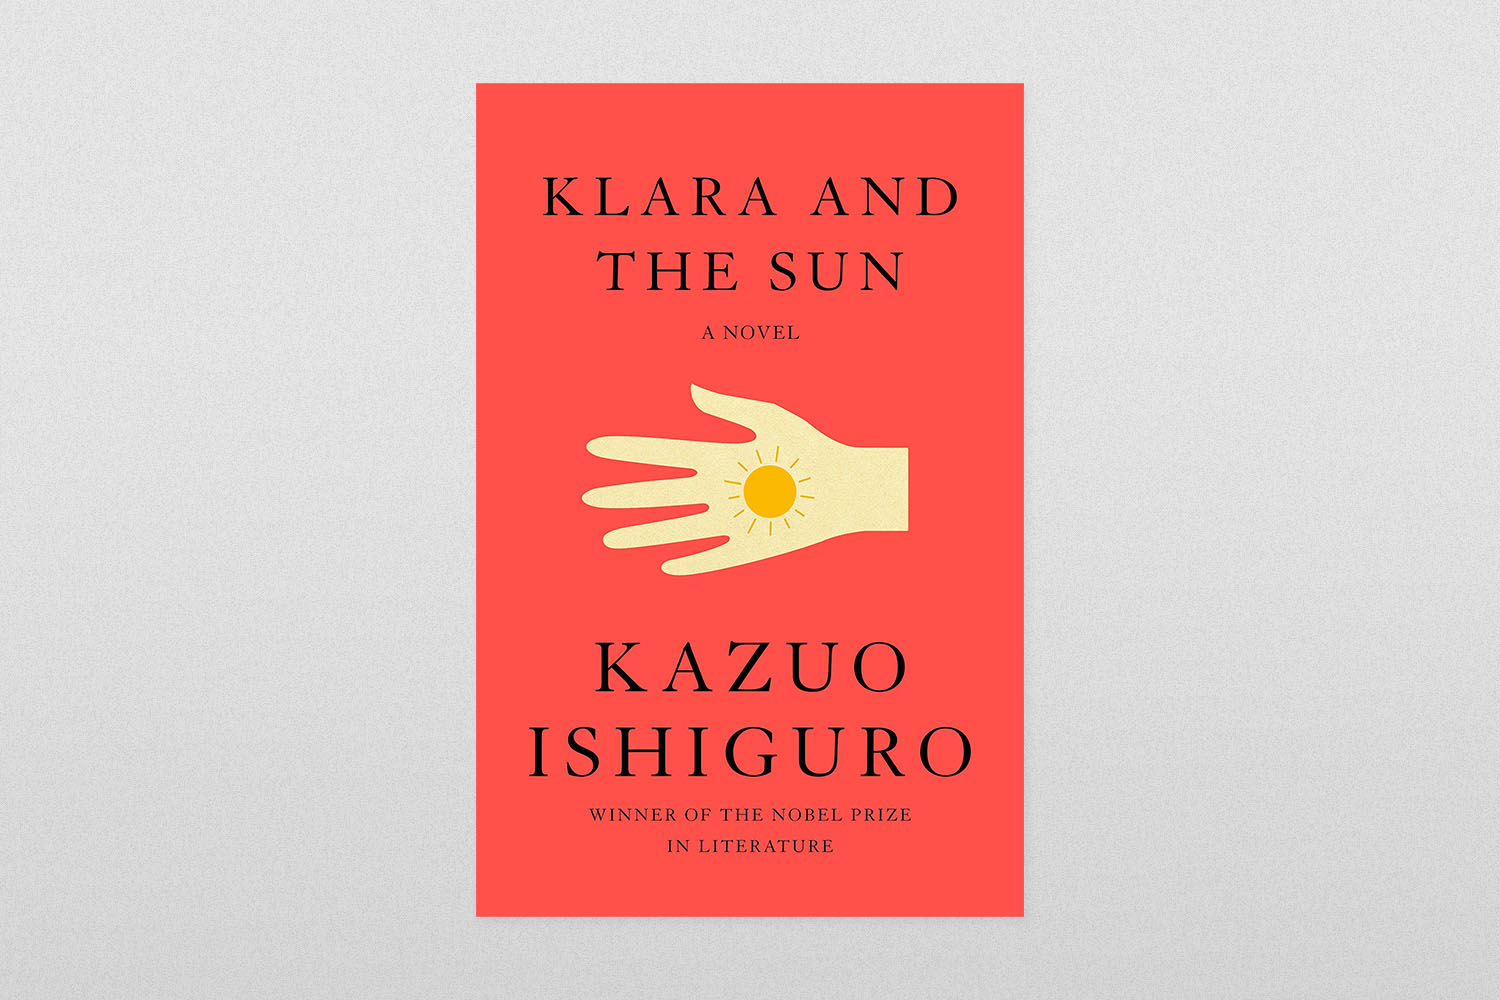 "Klara and the Sun"